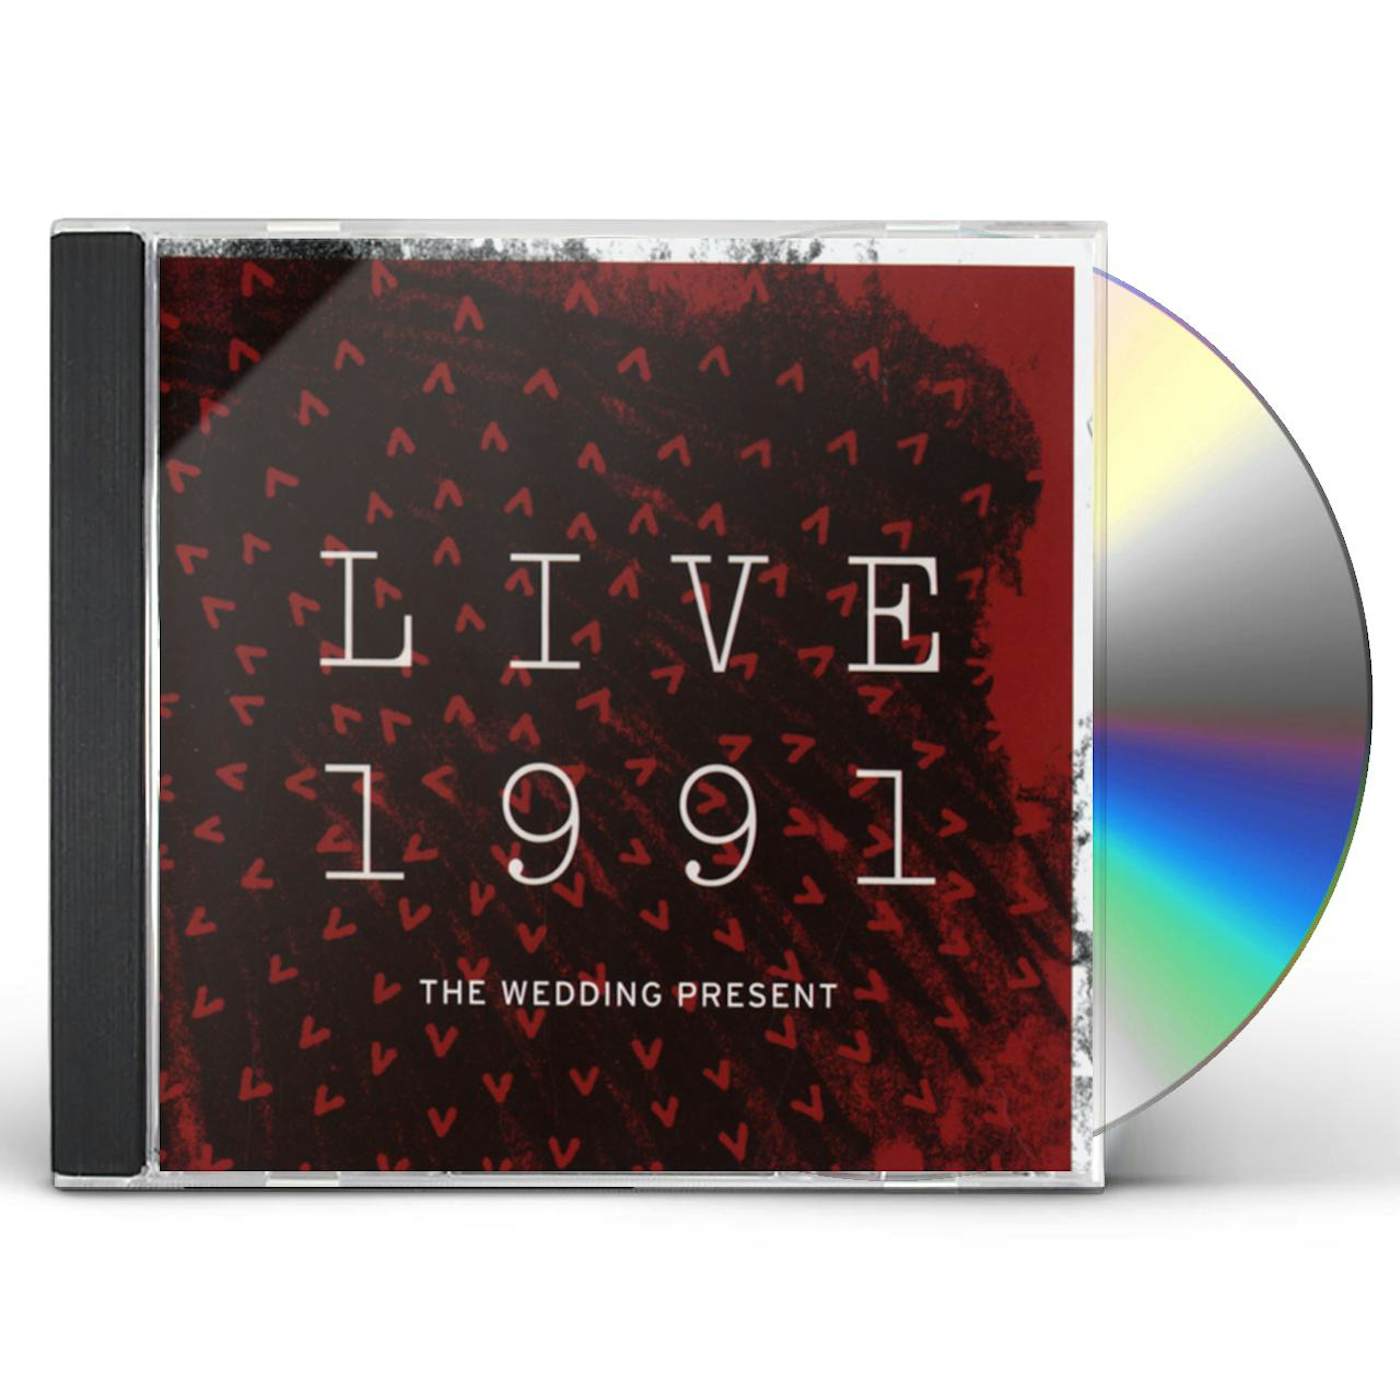 The Wedding Present LIVE 1991 CD